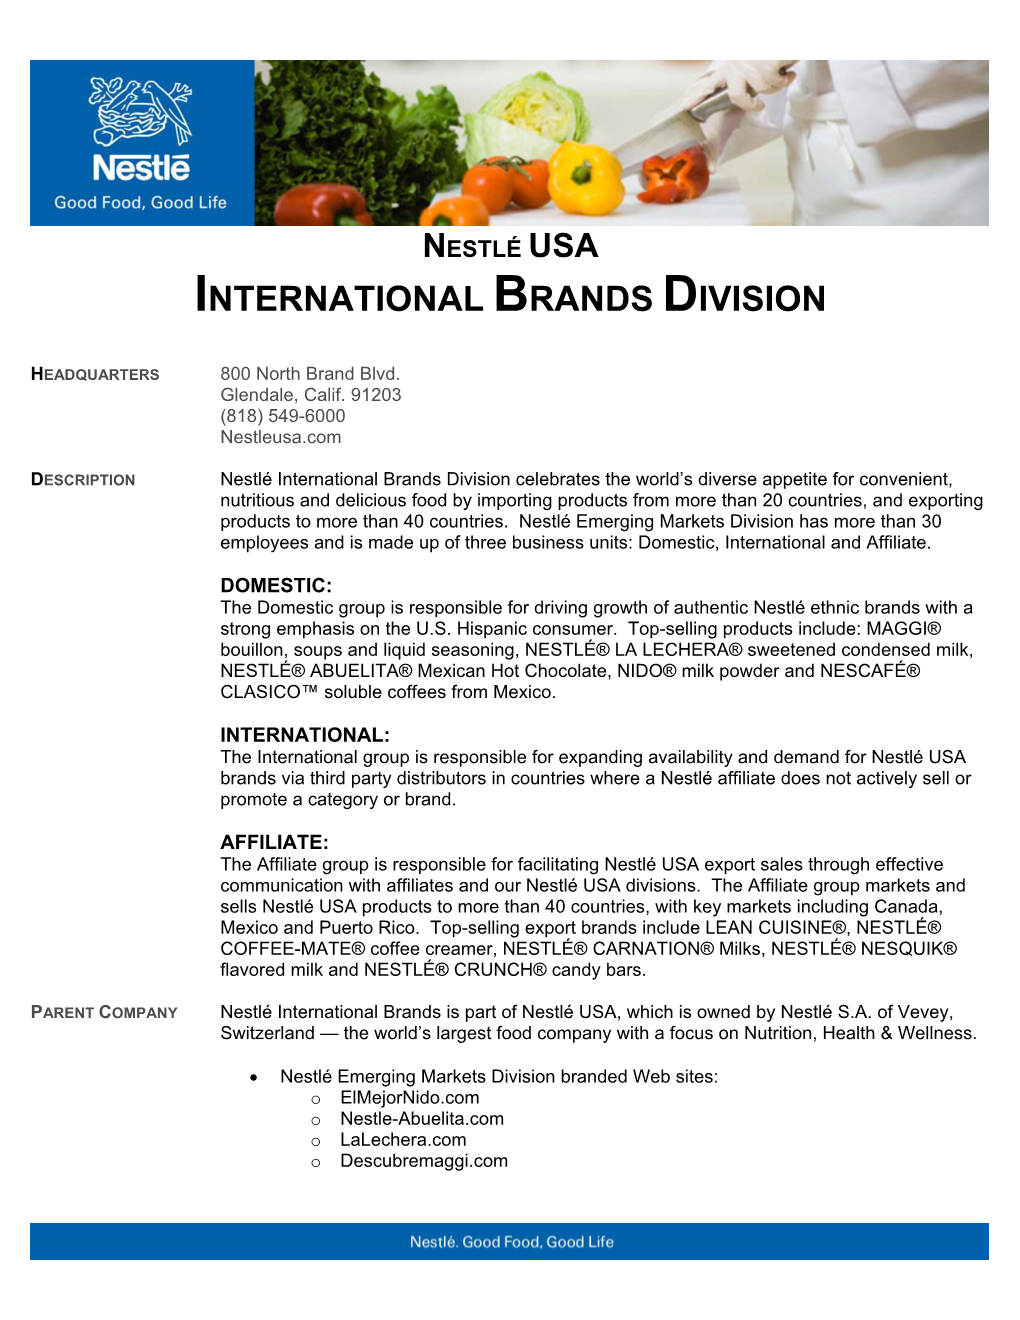 International Brands Division